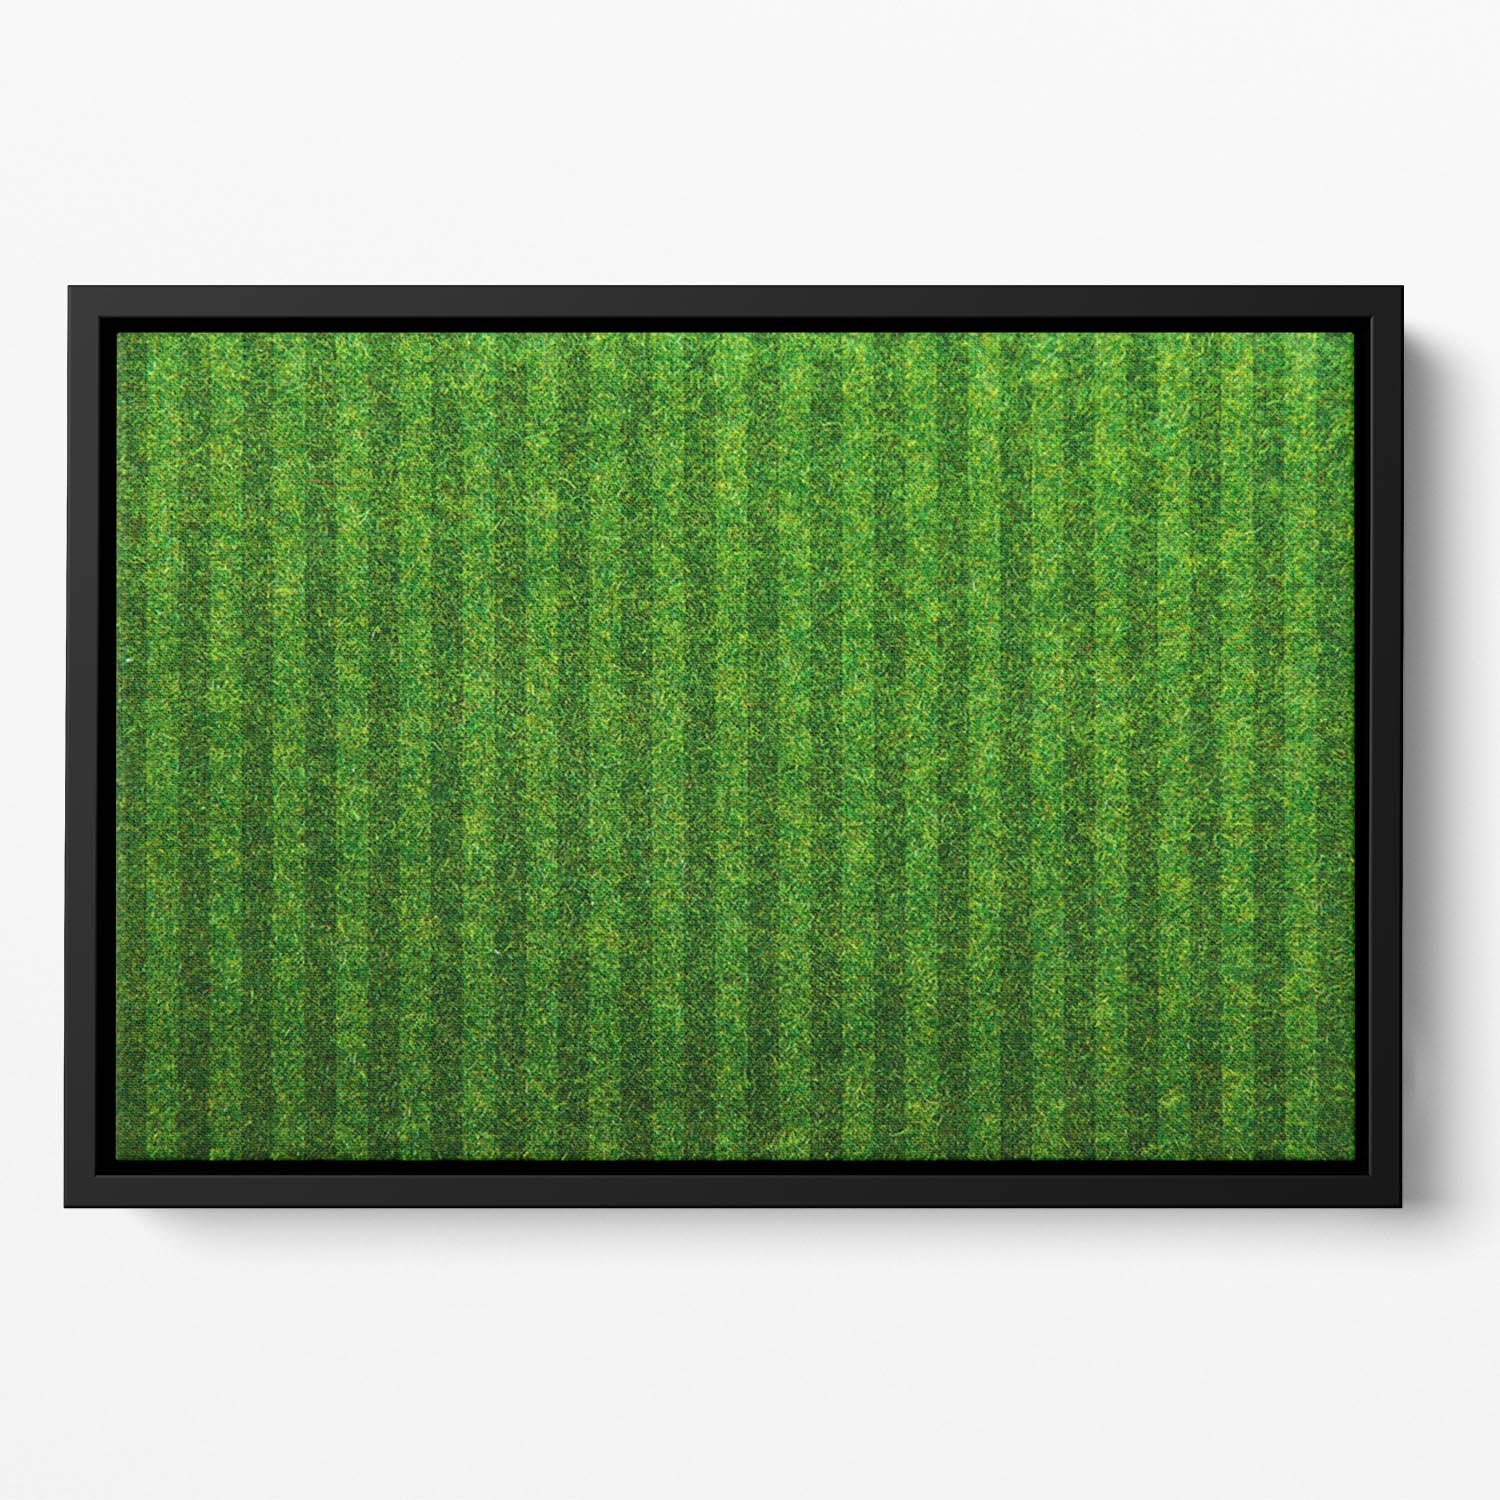 Green grass soccer field Floating Framed Canvas